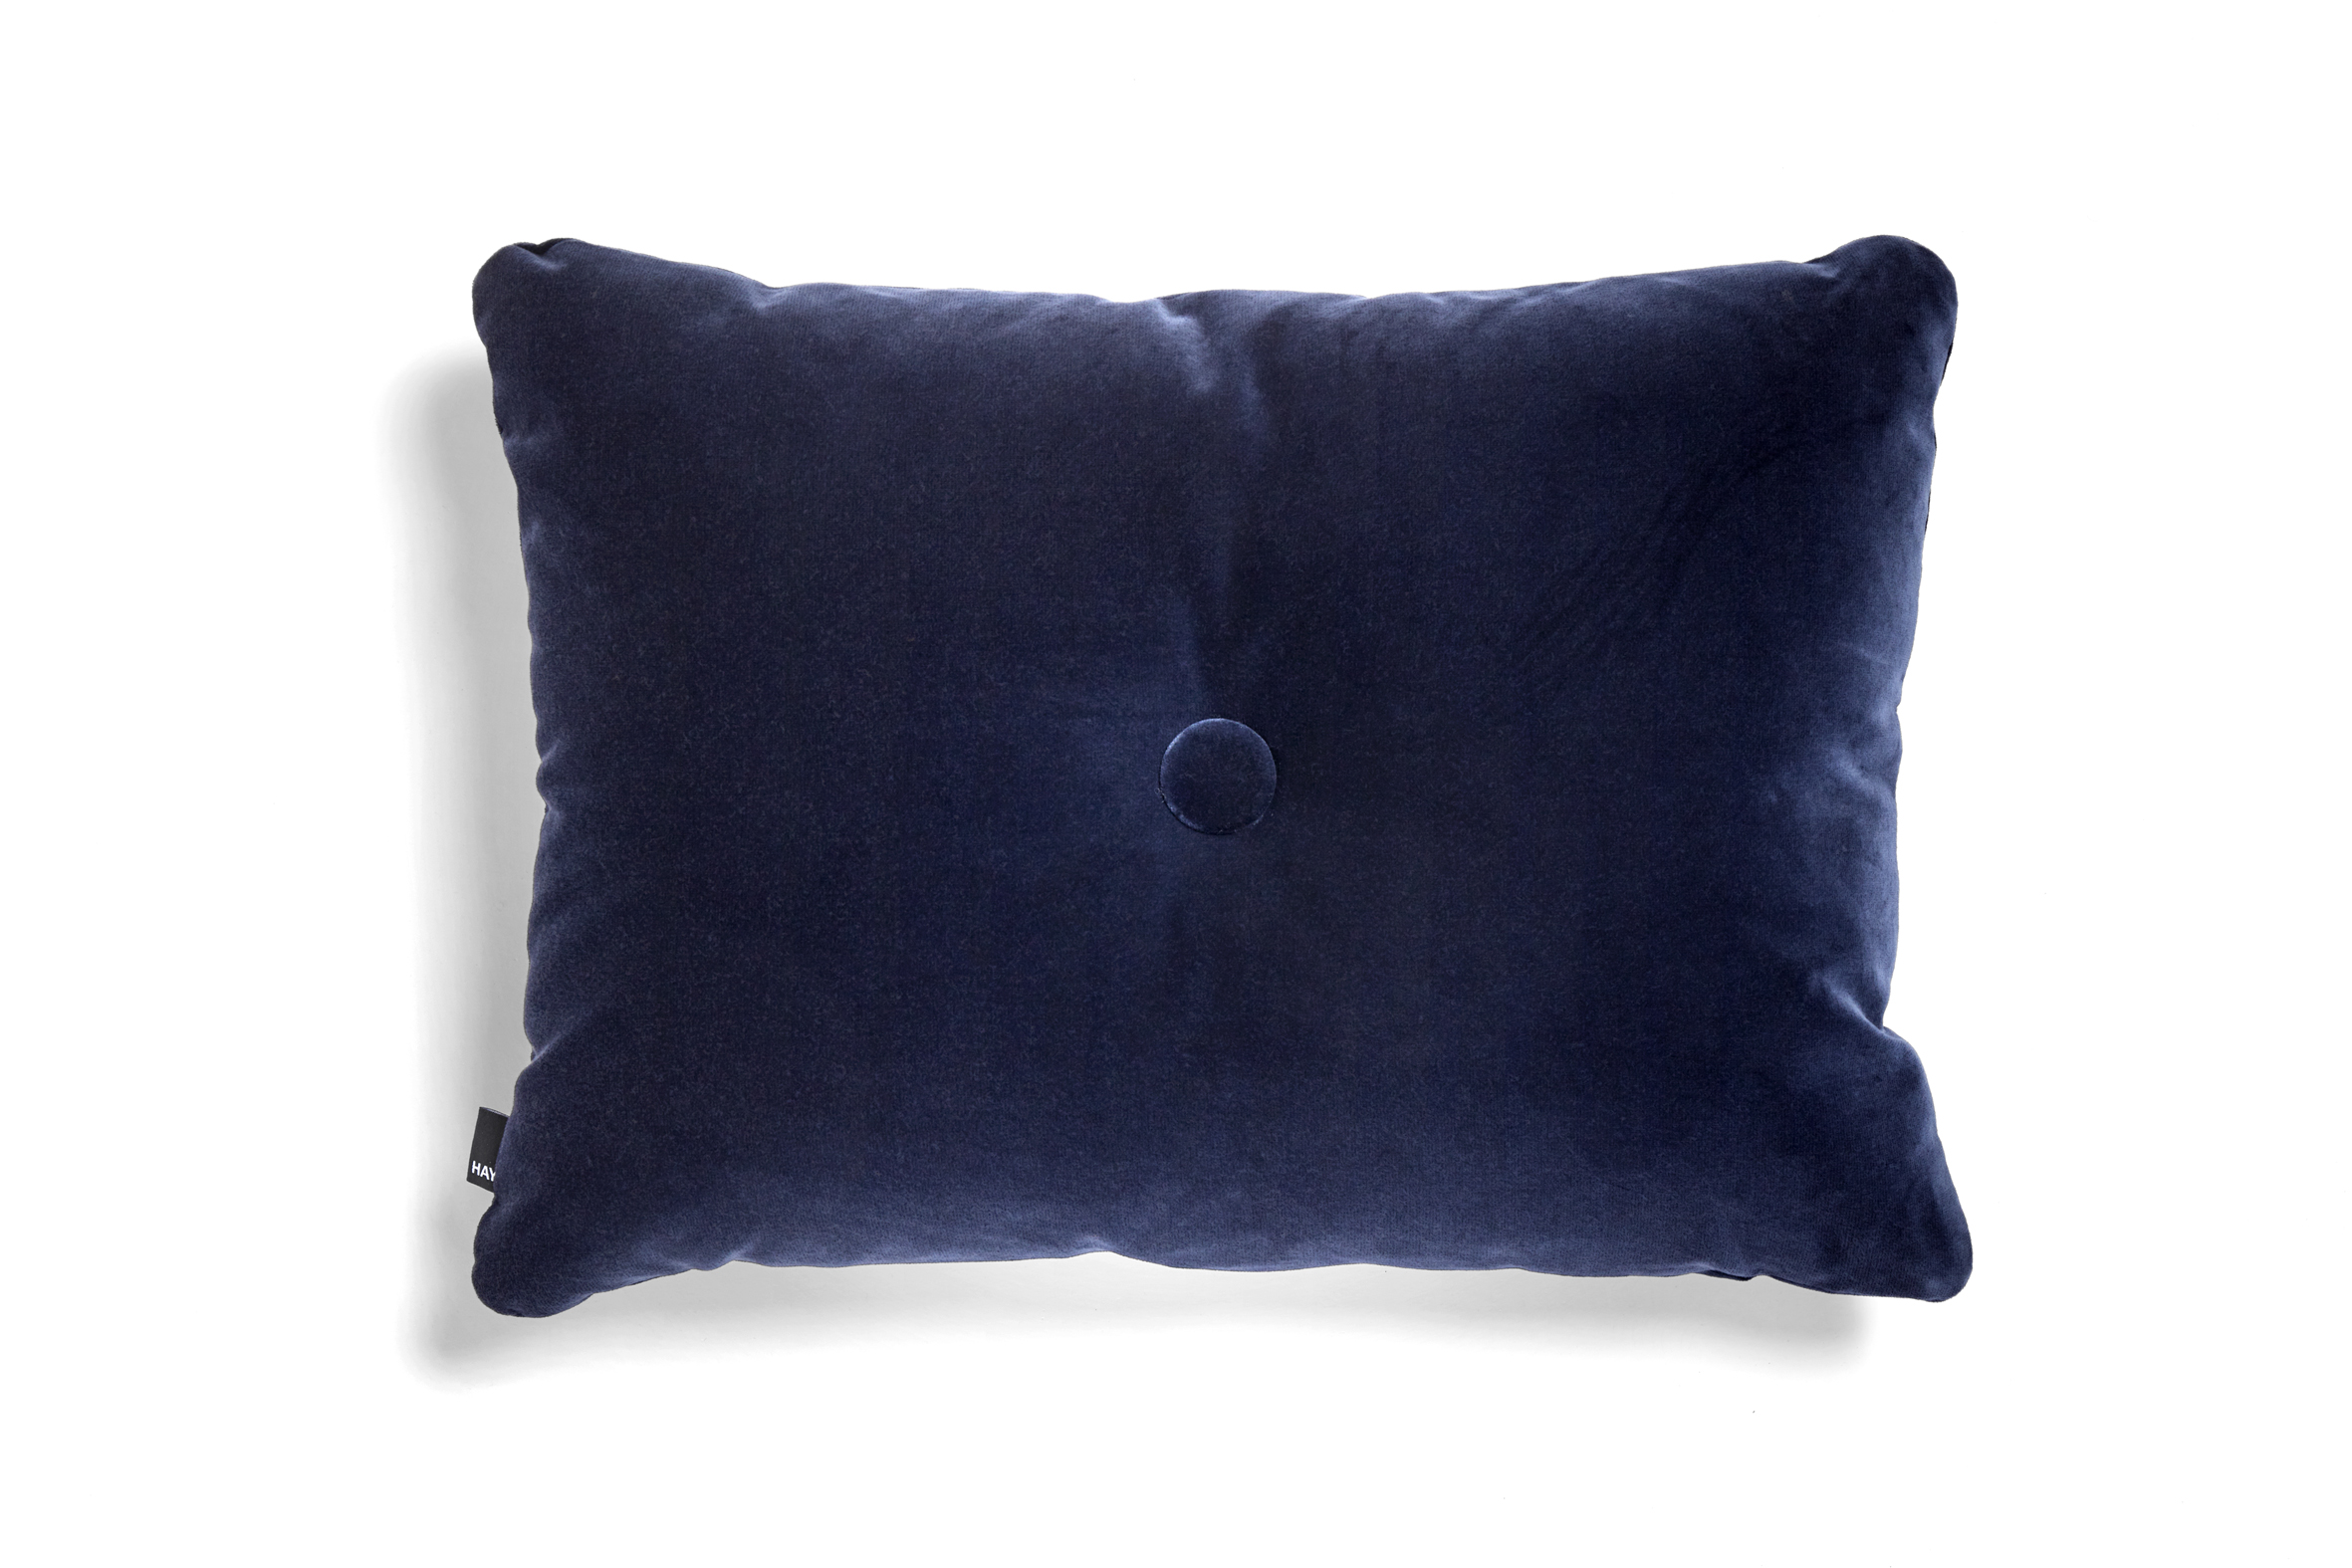  Dot Cushion Soft Pyntepude, 45x60 cm